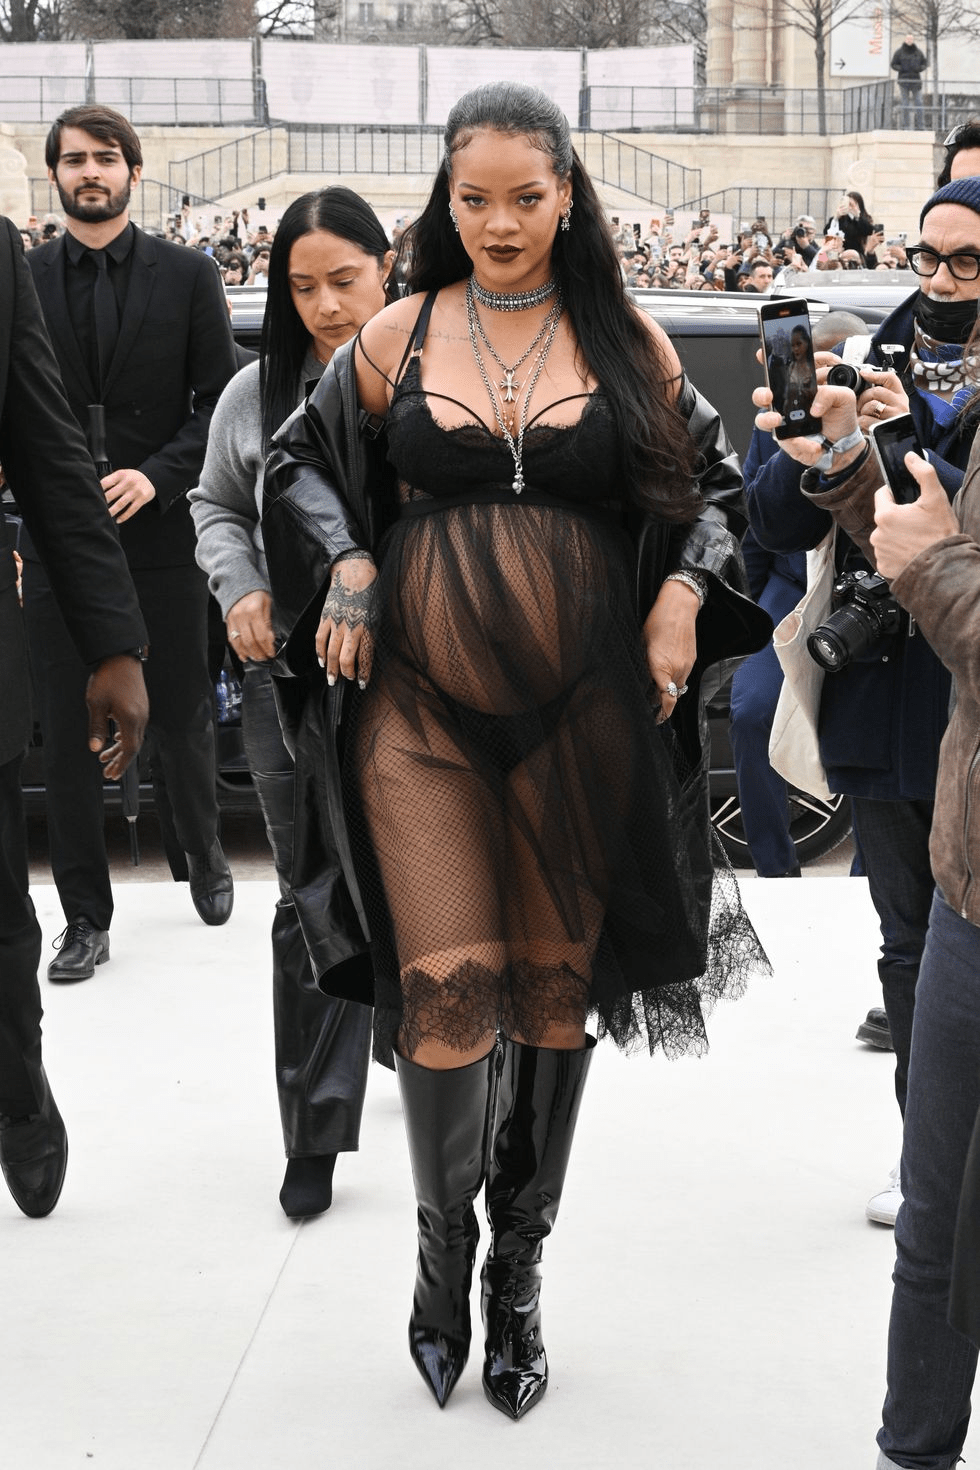 Rihanna wearing a black see-through dress during pregnancy